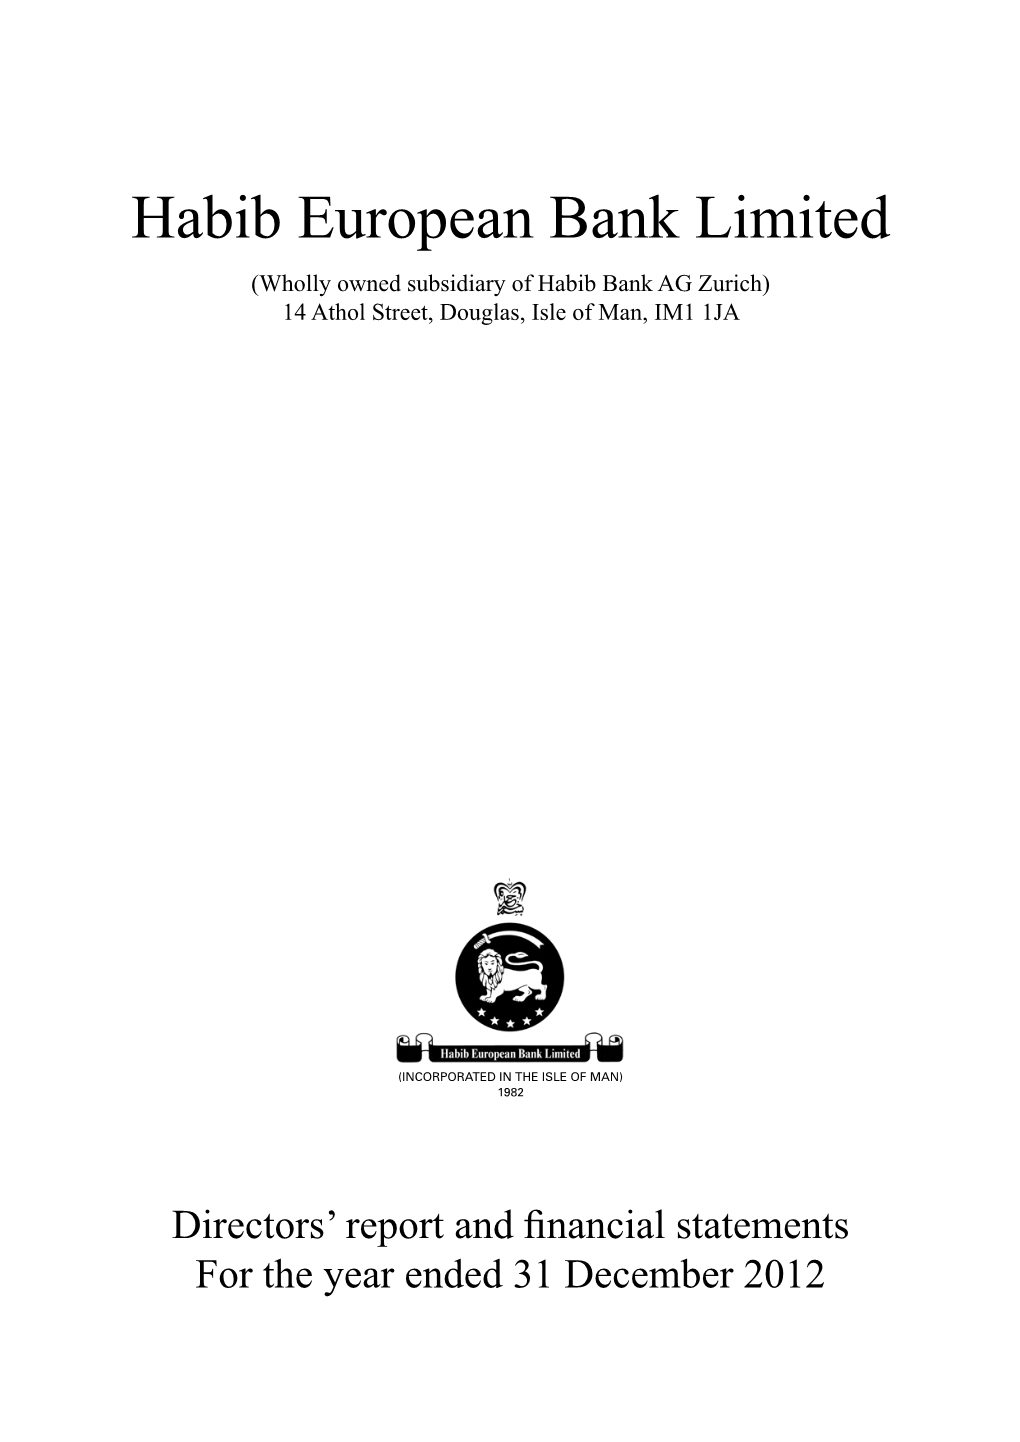 Habib European Bank Limited (Wholly Owned Subsidiary of Habib Bank AG Zurich) 14 Athol Street, Douglas, Isle of Man, IM1 1JA